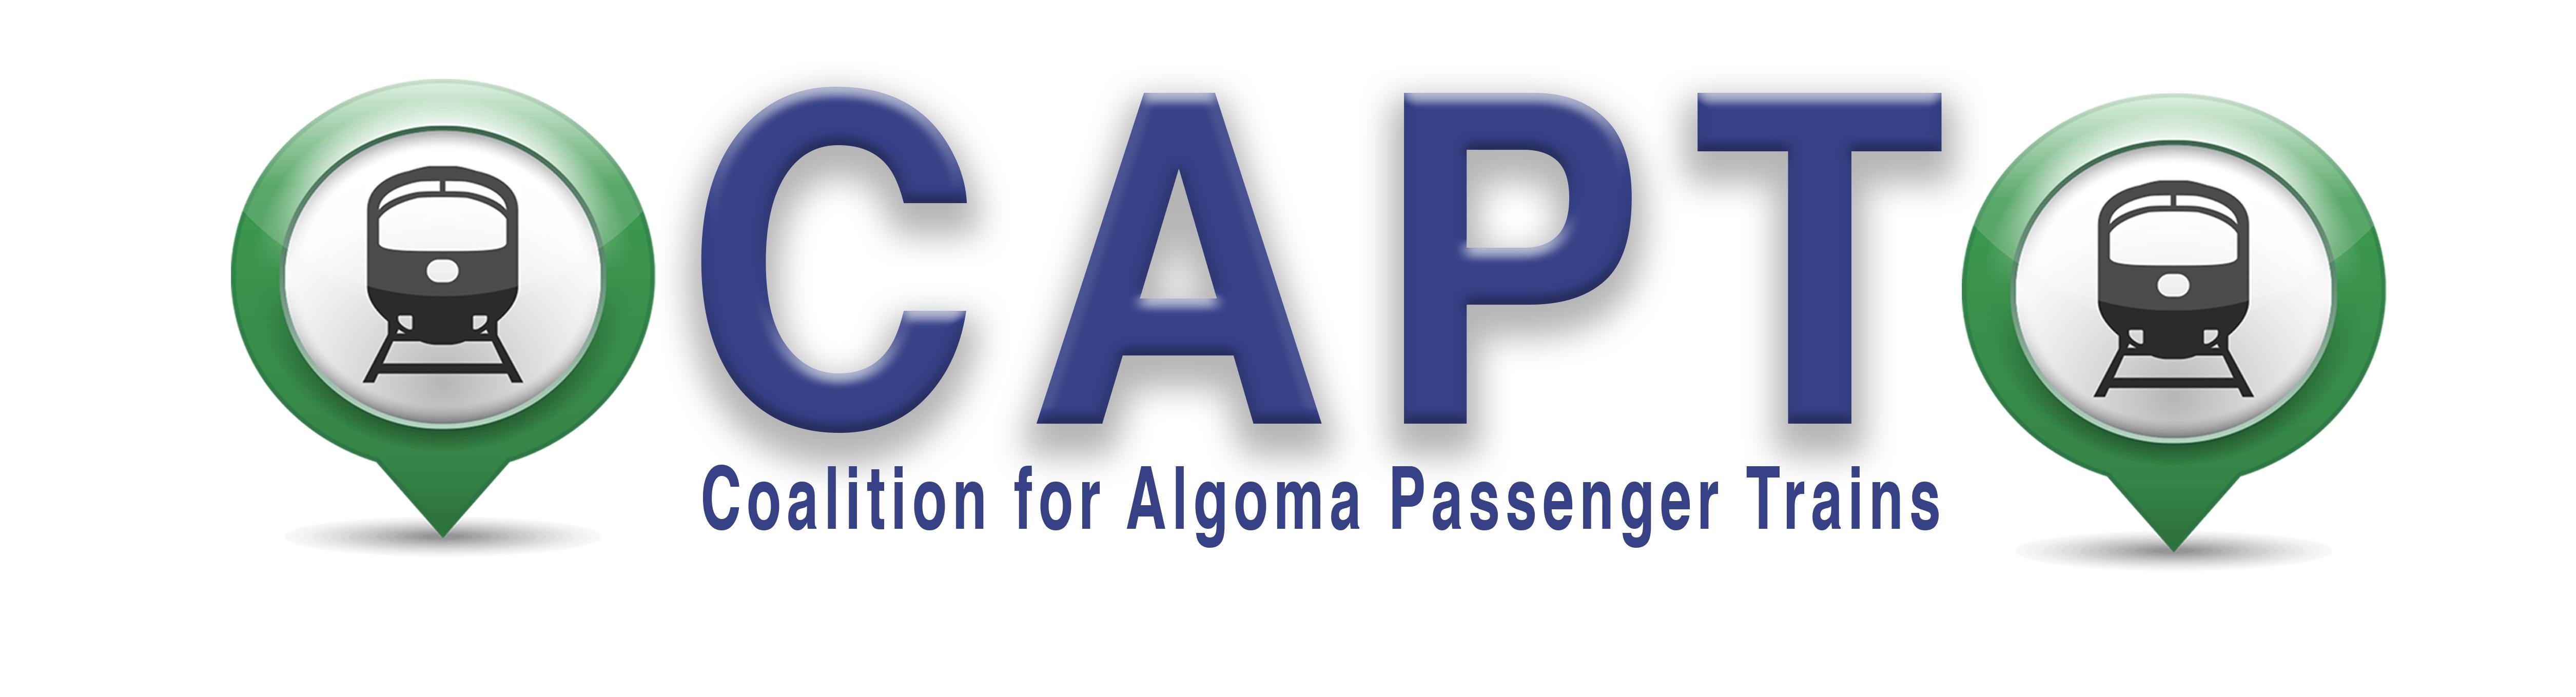 Passenger Logo - Coalition for Algoma Passenger Trains